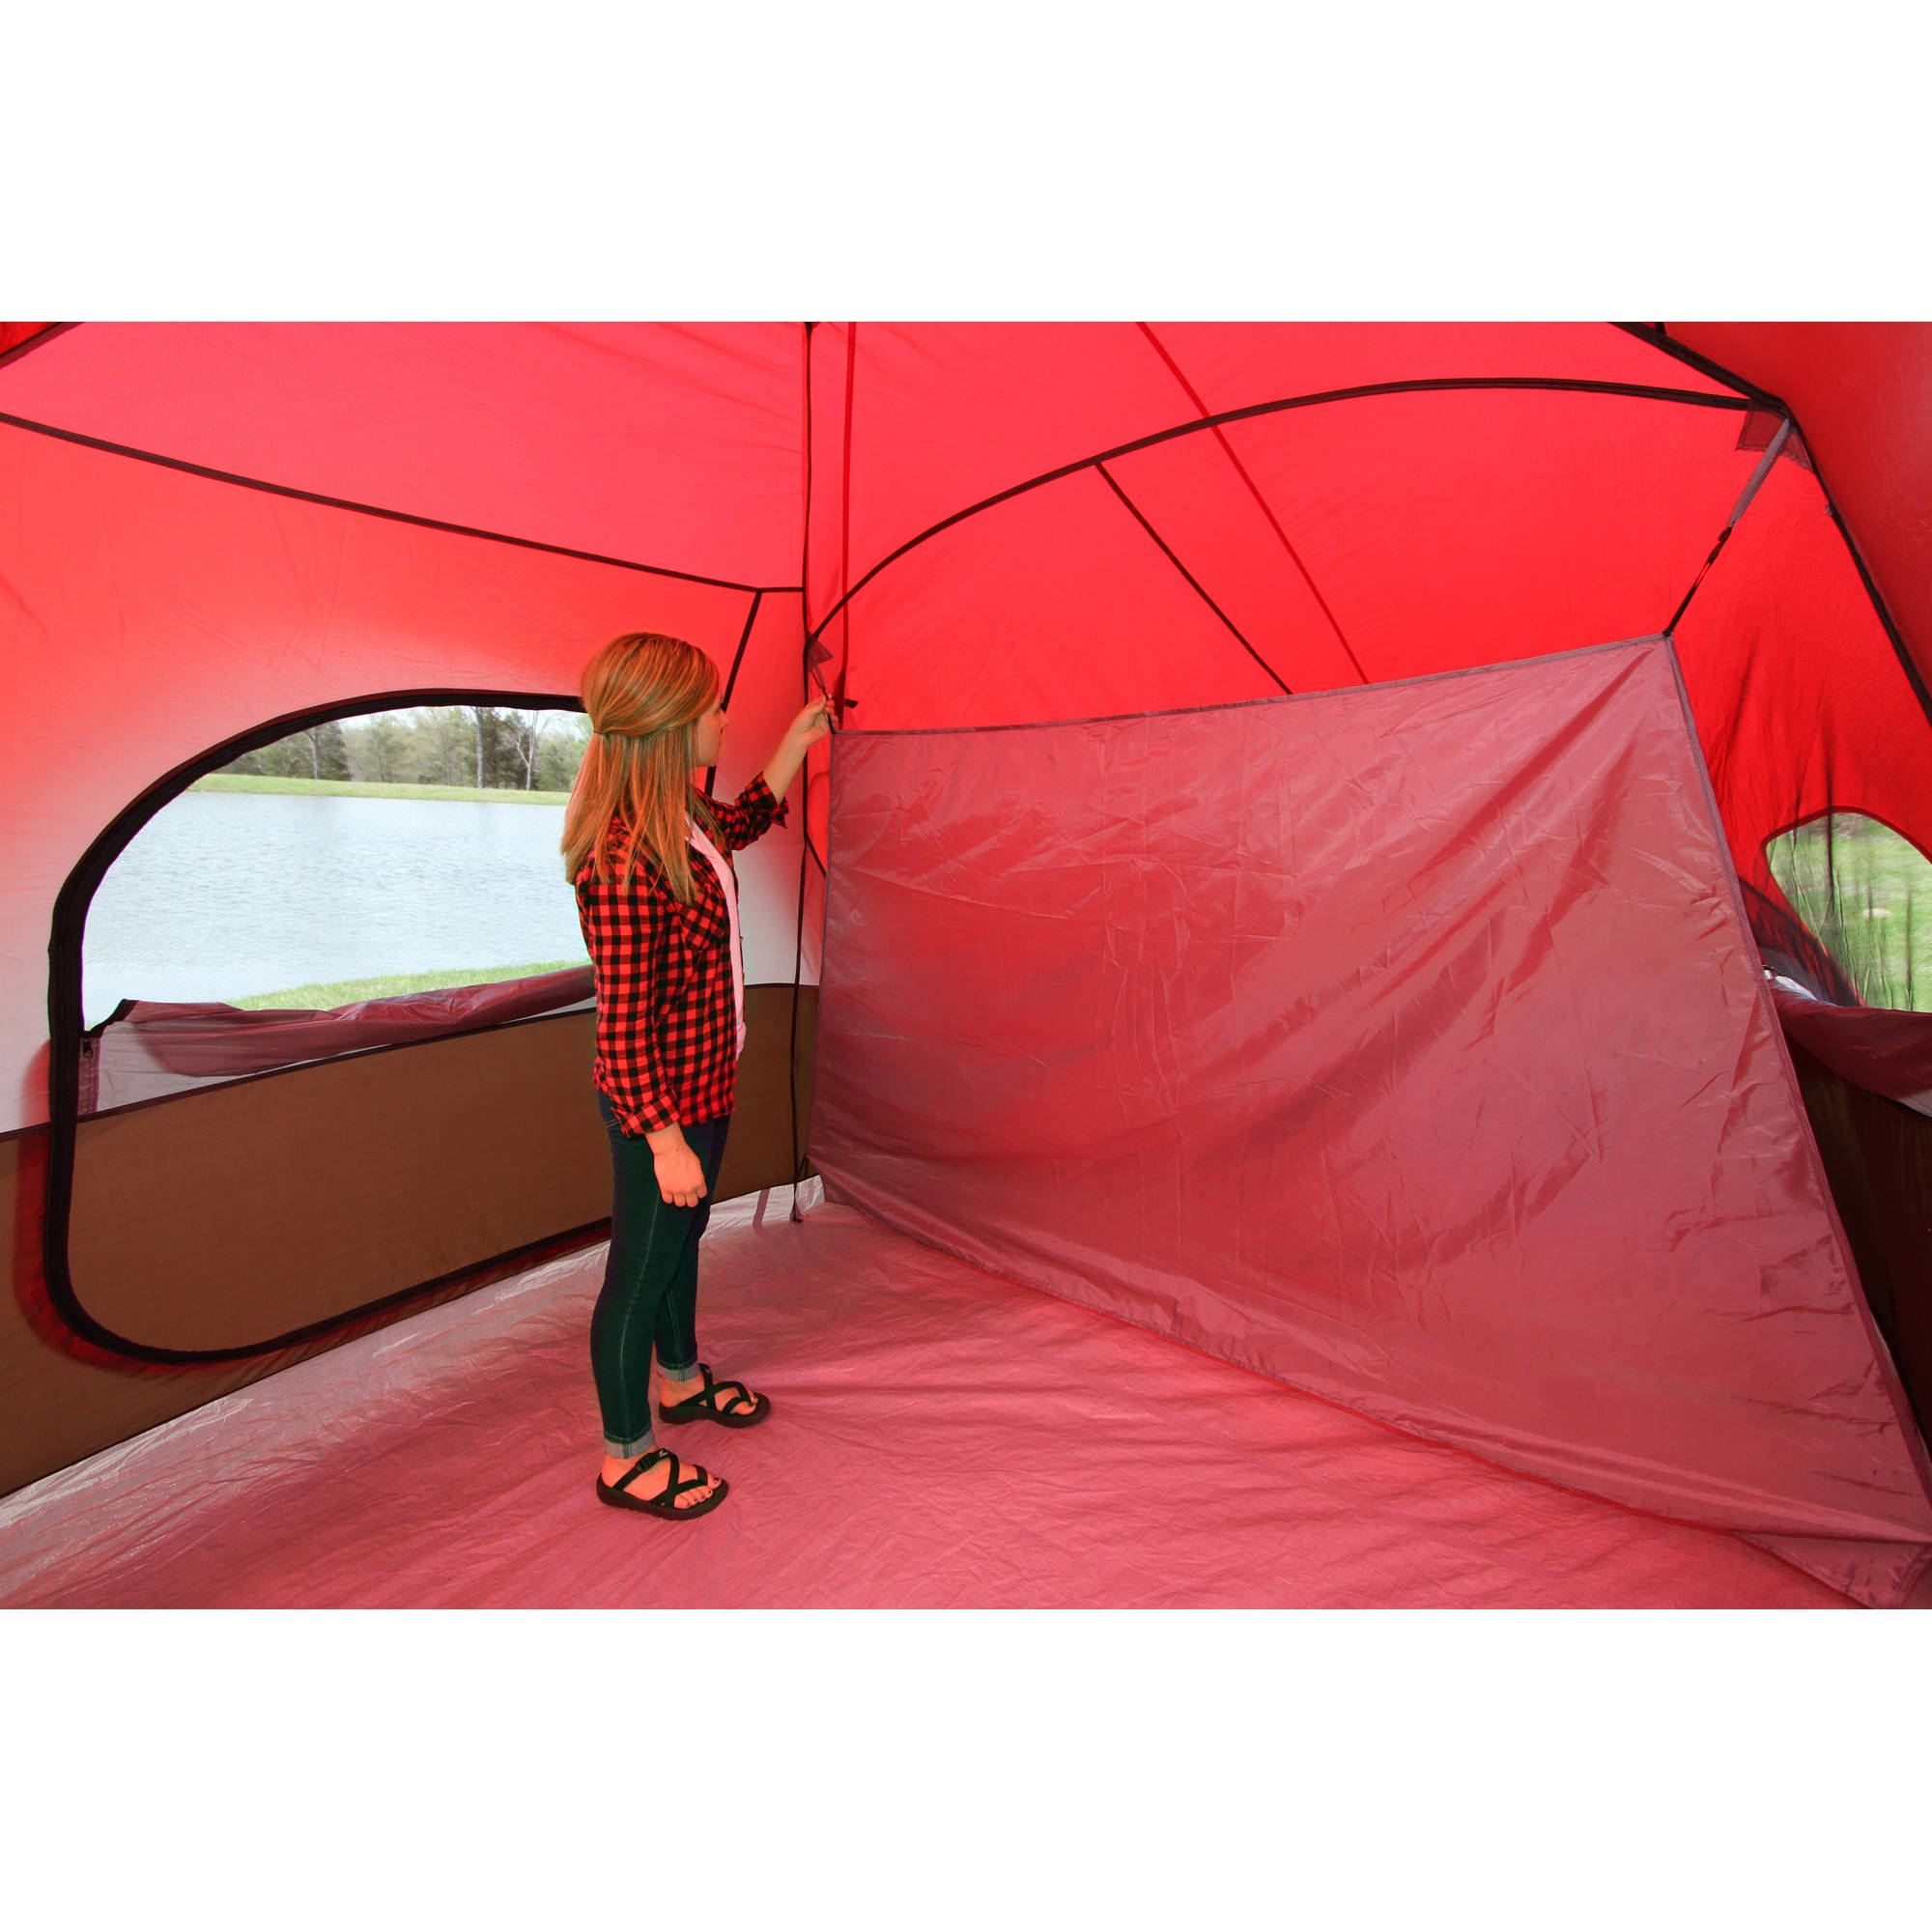 OT 21' x 15' Family Tent, Sleeps 10 - image 4 of 13